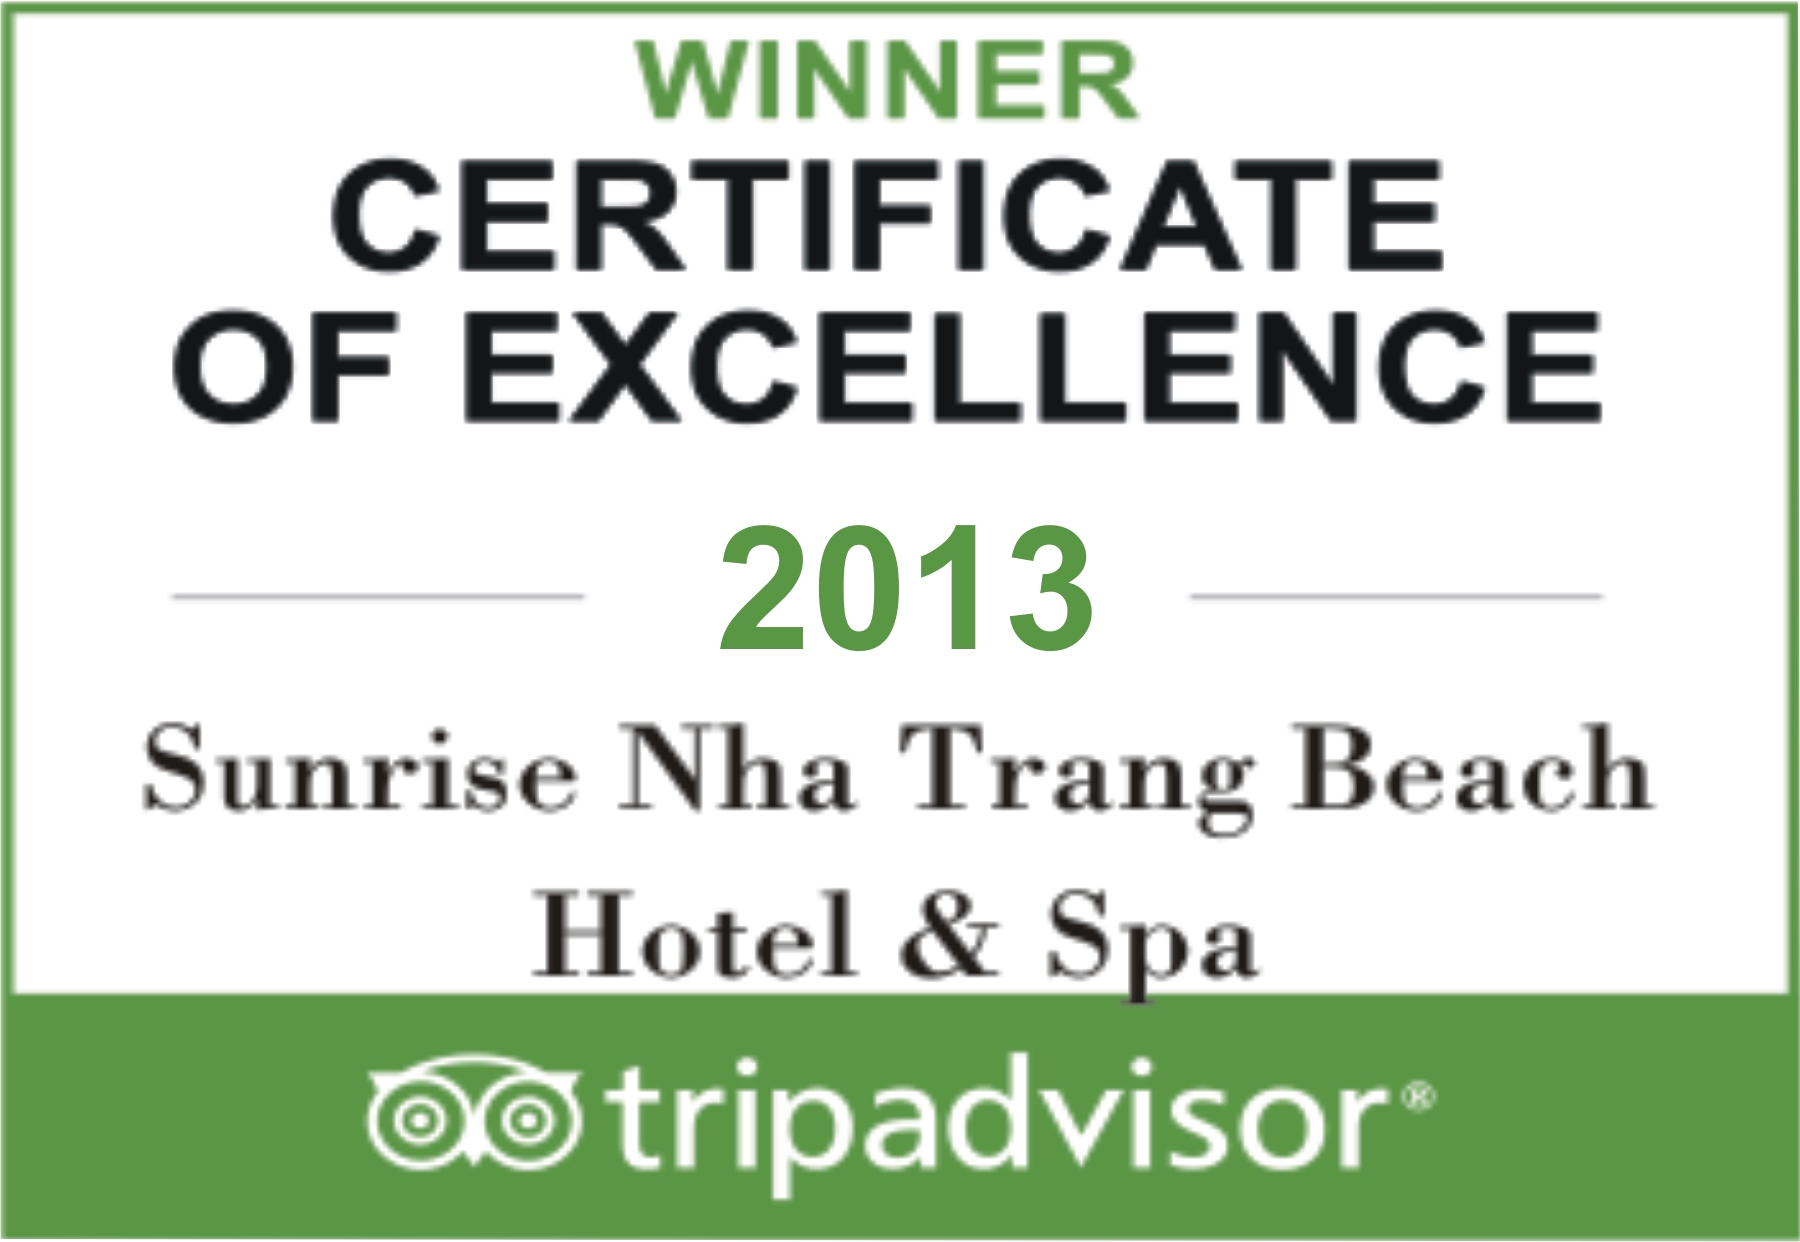 Sunrise Nha Trang Beach Hotel & Spa Earns Tripadvisor Certificate of Excellence